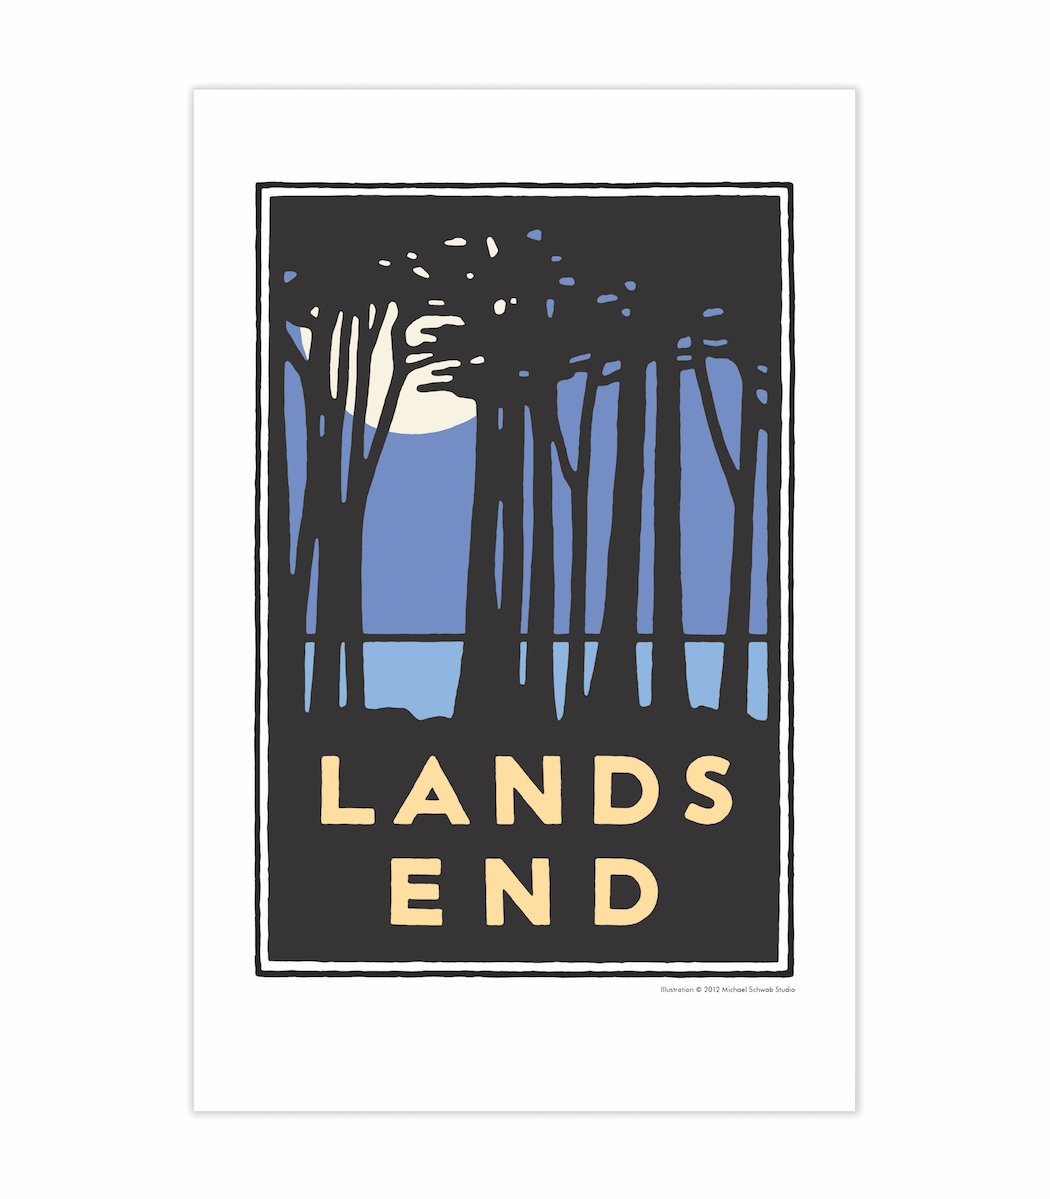 11 x 17 inch Lands End print, art by Michael Schwab.